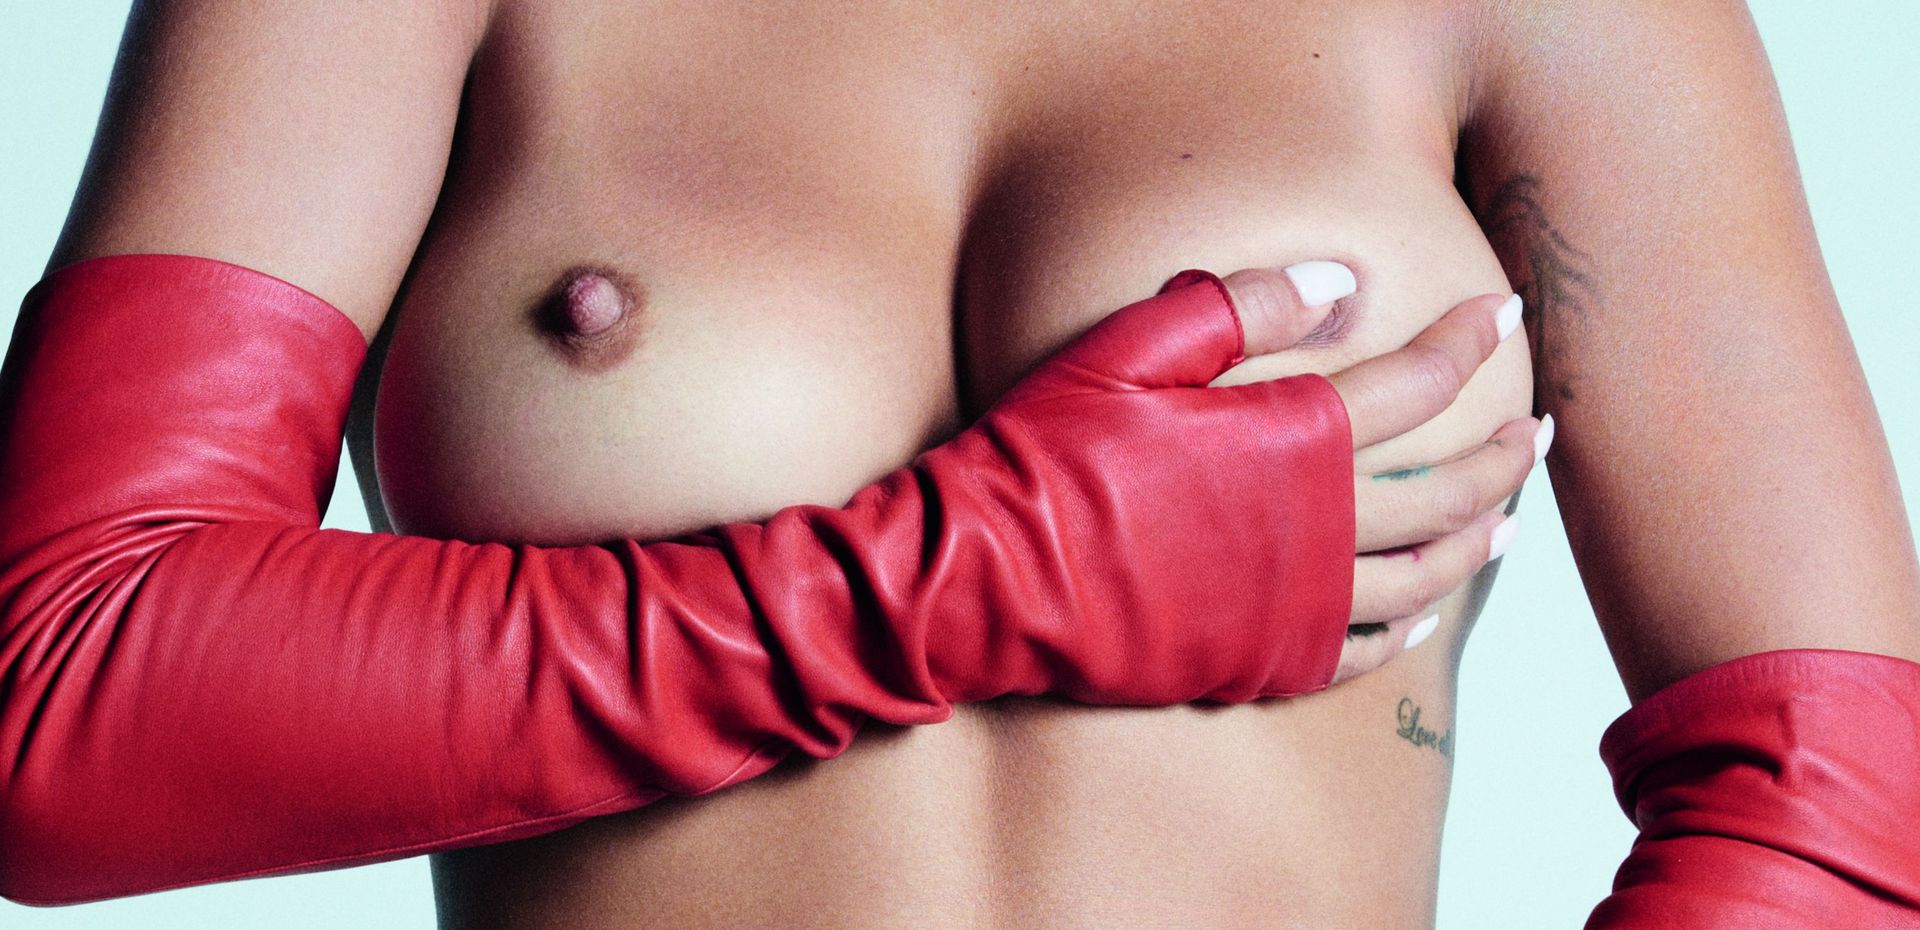 Rita Ora Shows Her Nude Tits for Clash (2 Photos)